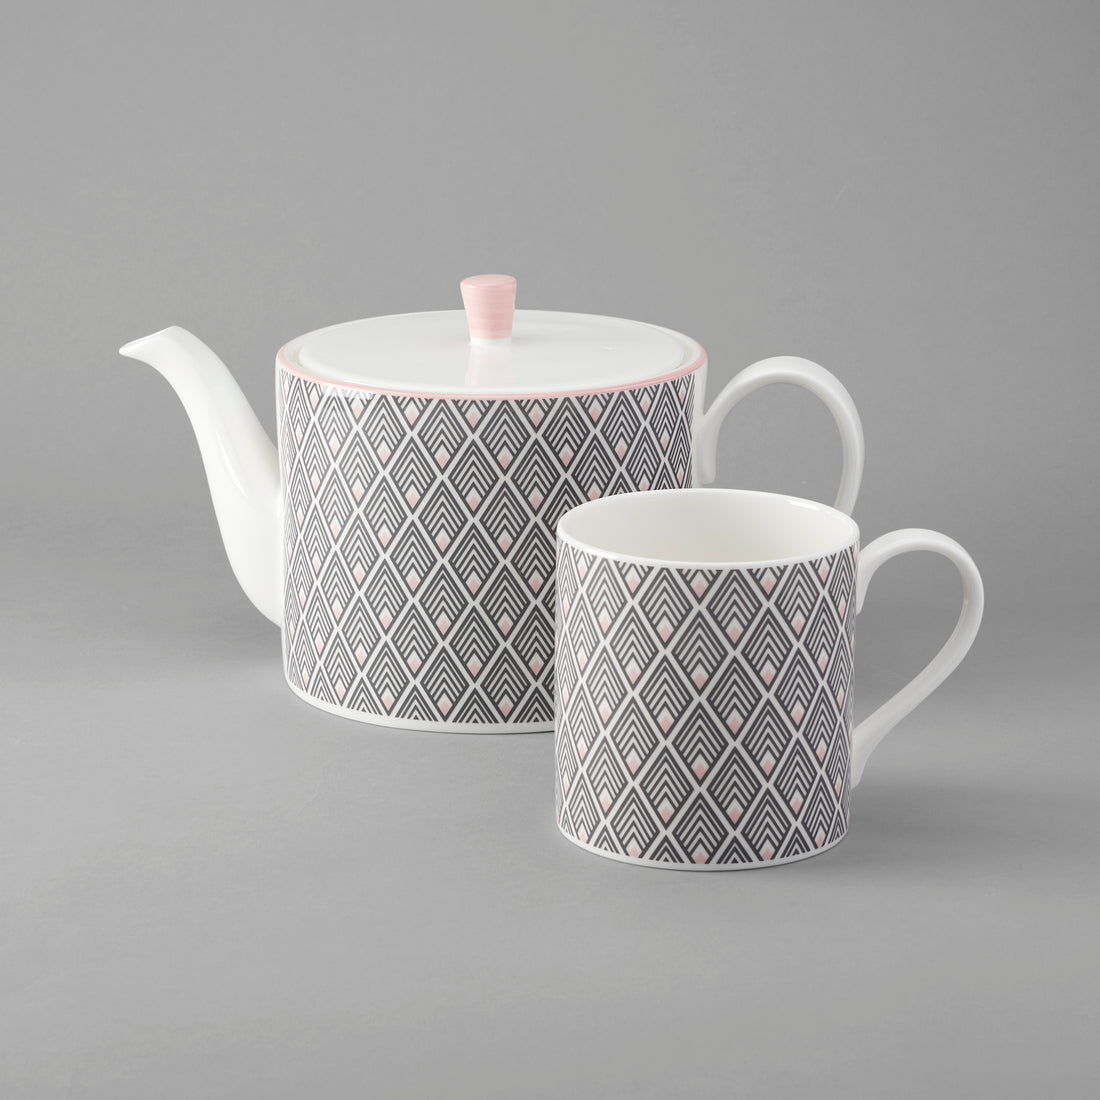 Gatsby Teapot in Grey & Blush Pink - 1L